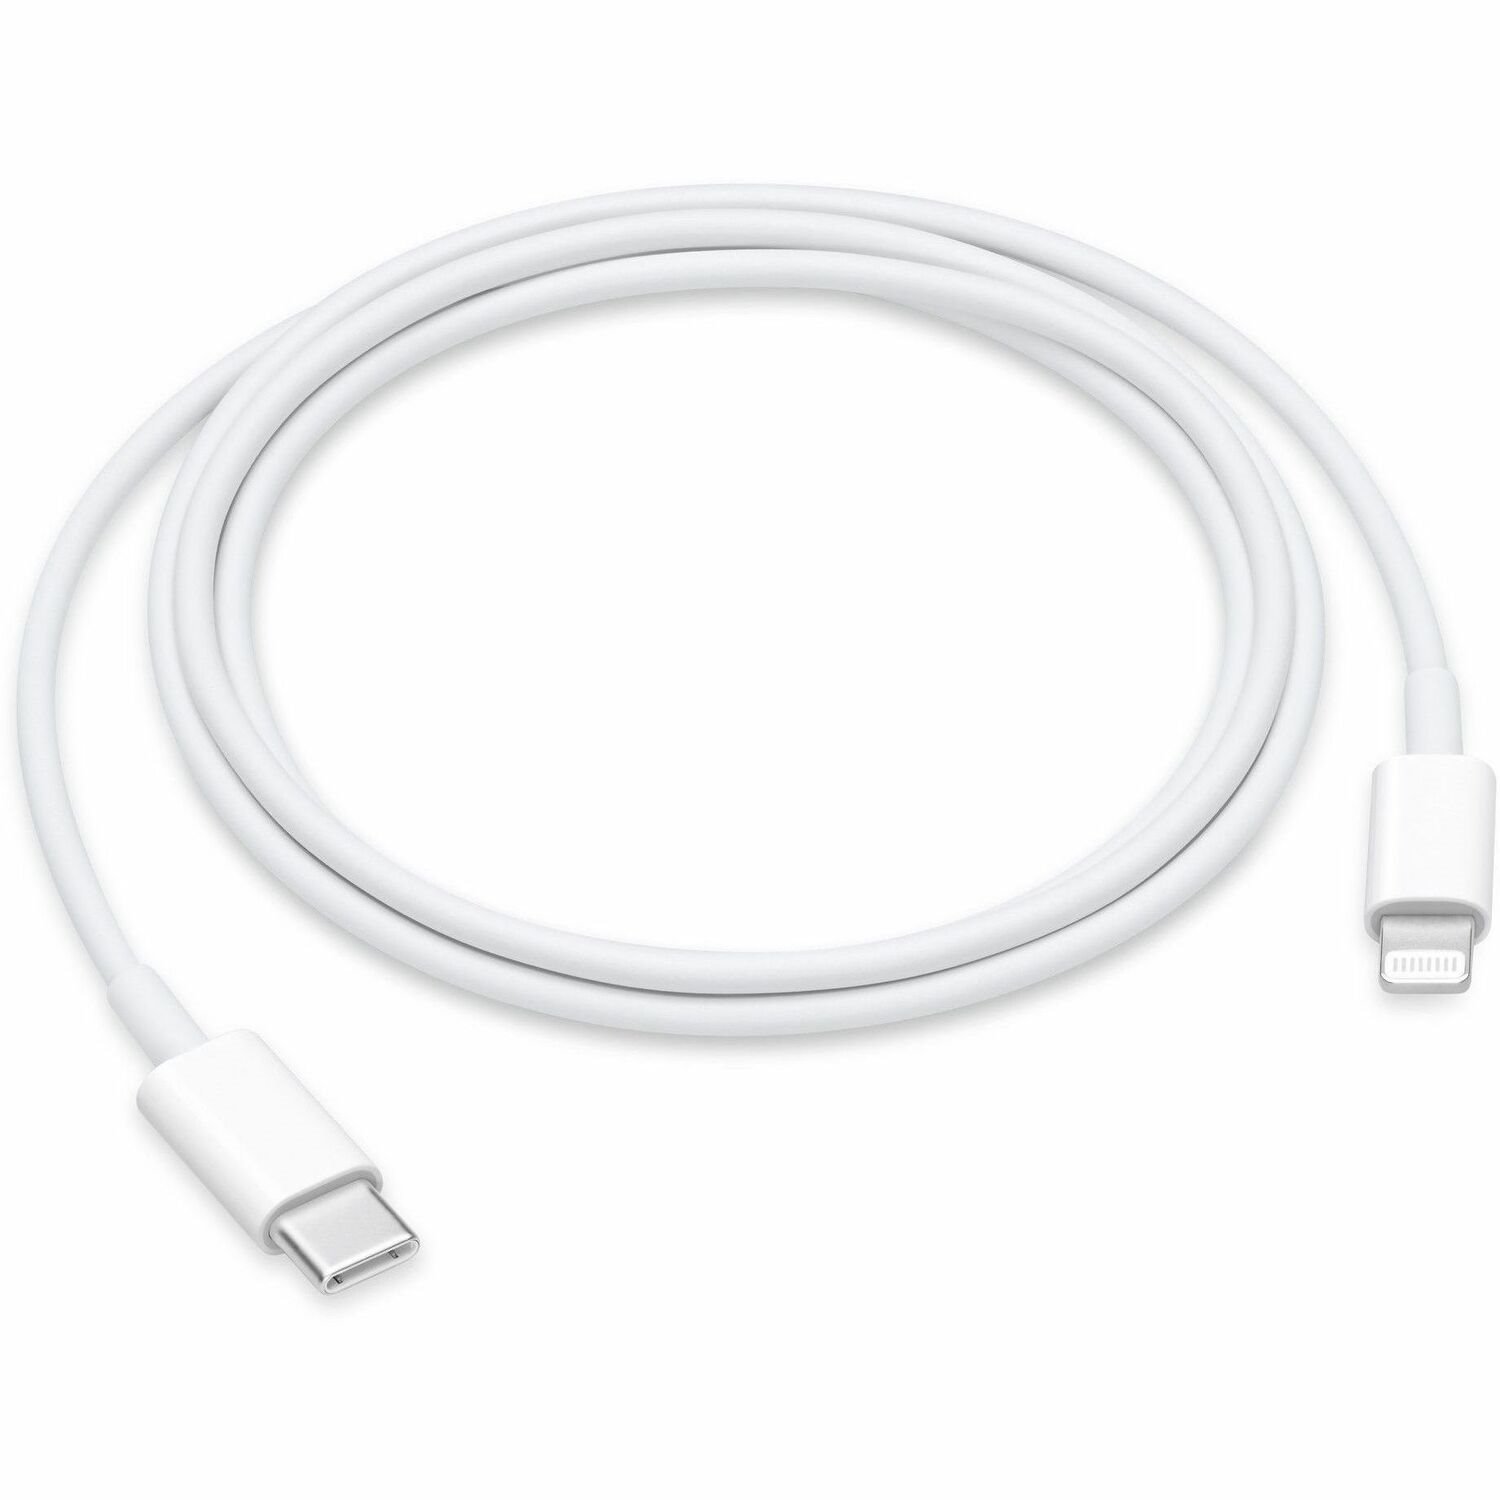 Apple 1 m Lightning/USB-C Data Transfer Cable